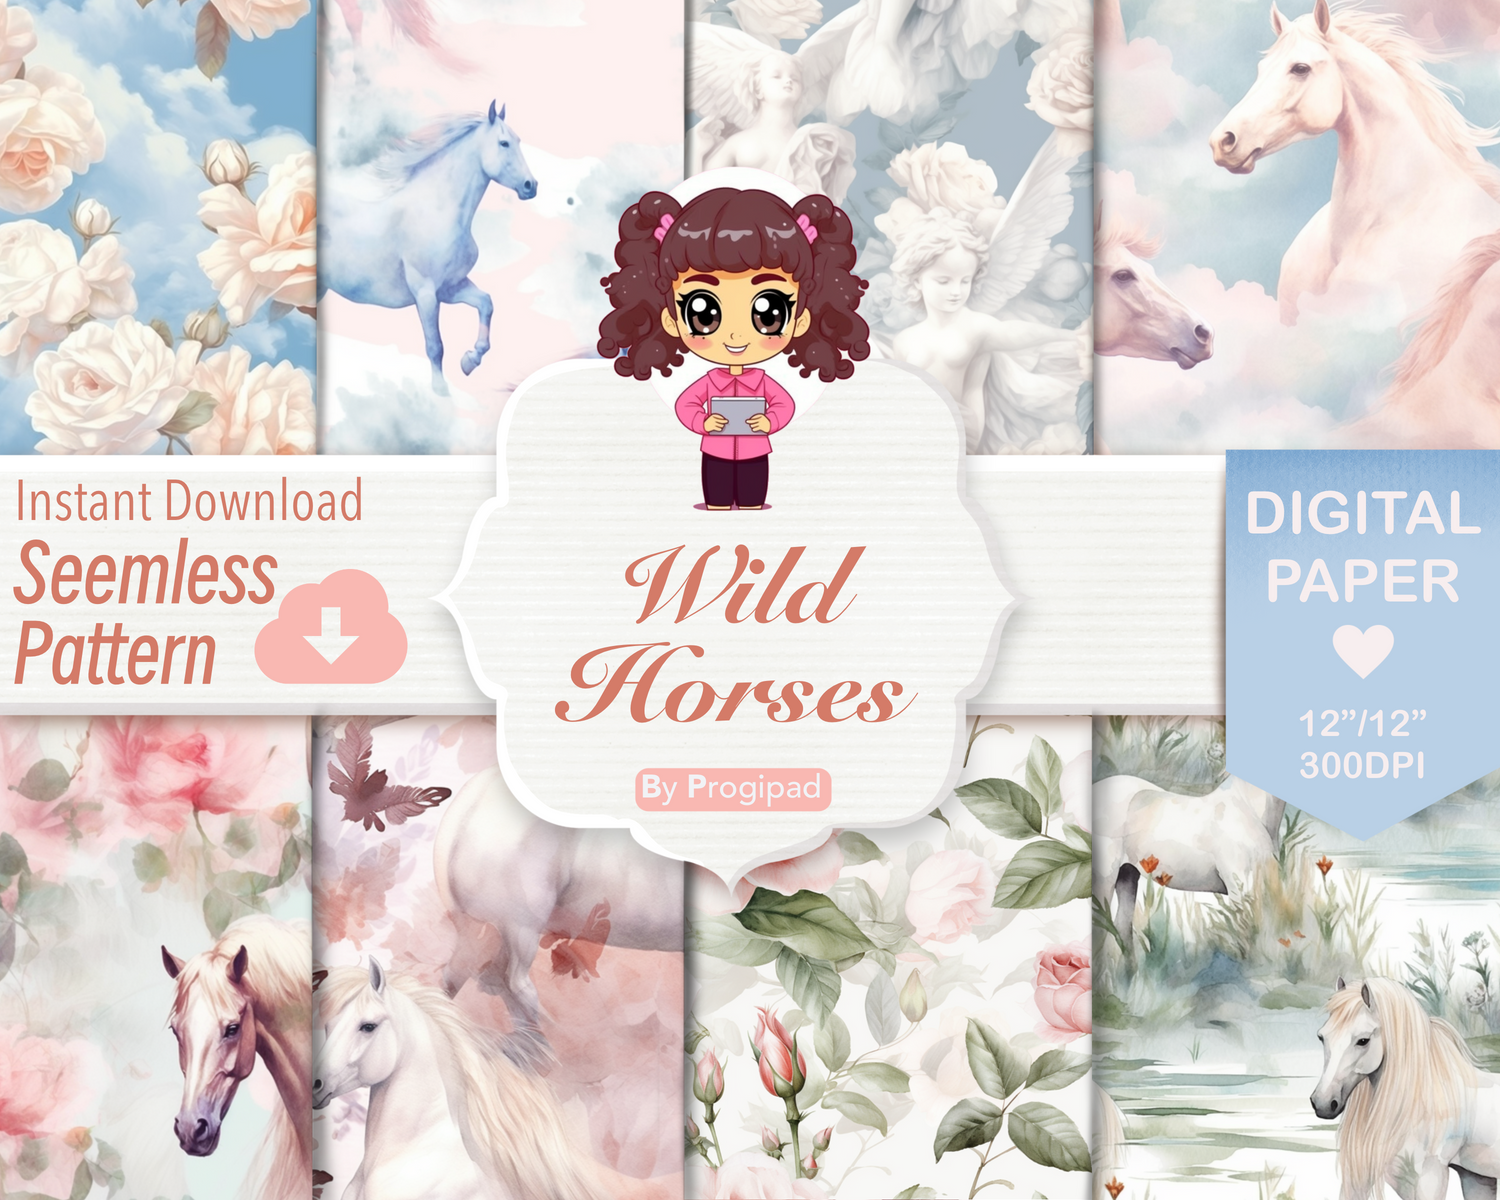 Digital paper: Wild Horses